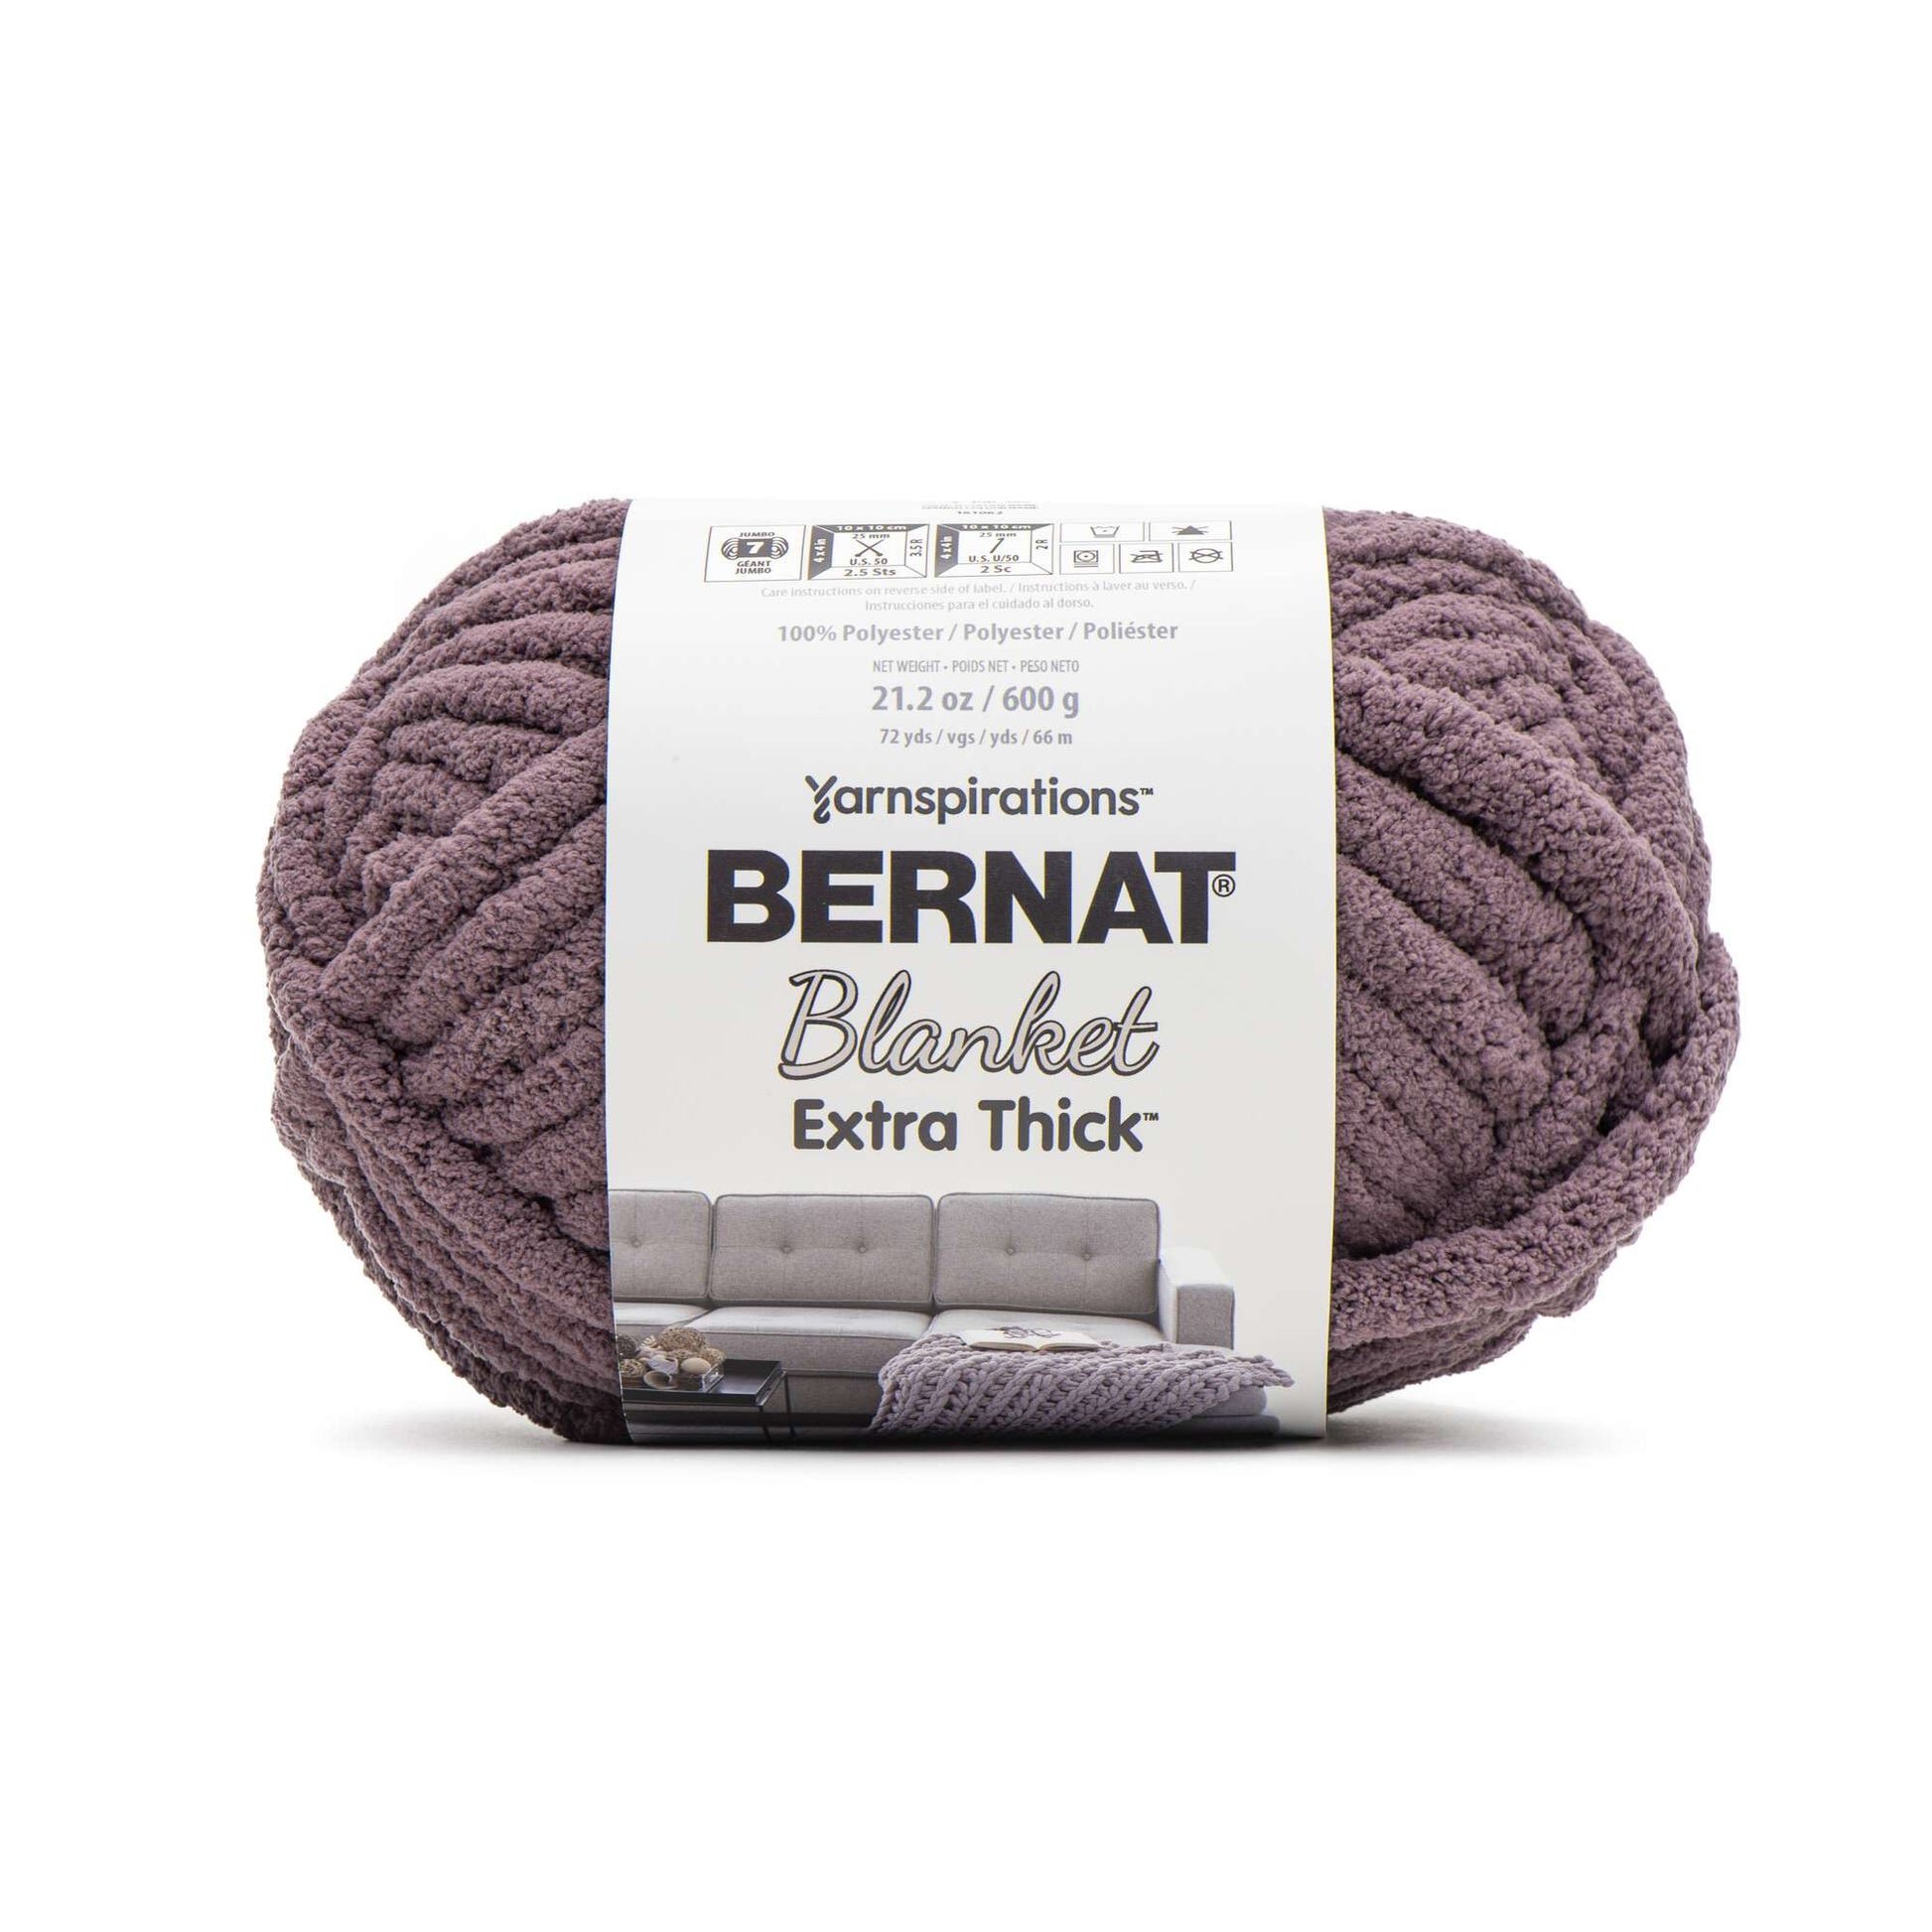 Bernat Blanket Extra Thick Yarn (600g/21.2oz) - Discontinued Shades Lunar Purple